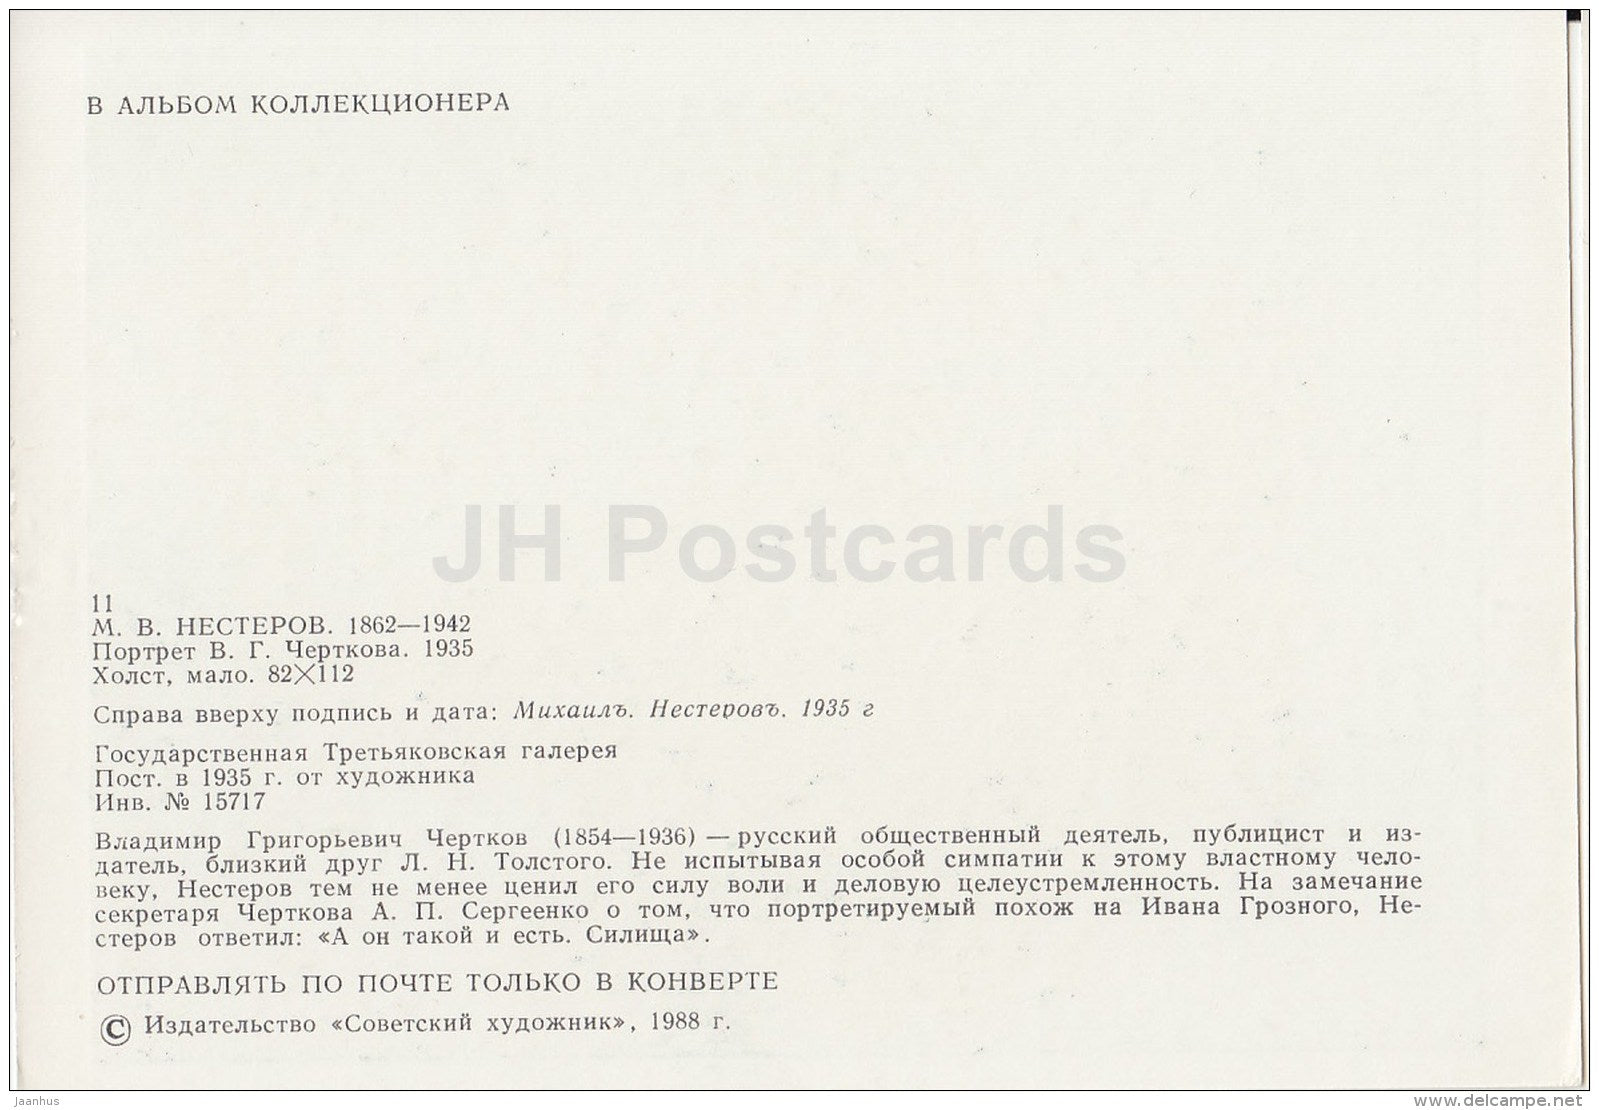 painting by M. Nesterov - Portrait of V. Chertkov , 1935 - Russian art - 1988 - Russia USSR - unused - JH Postcards